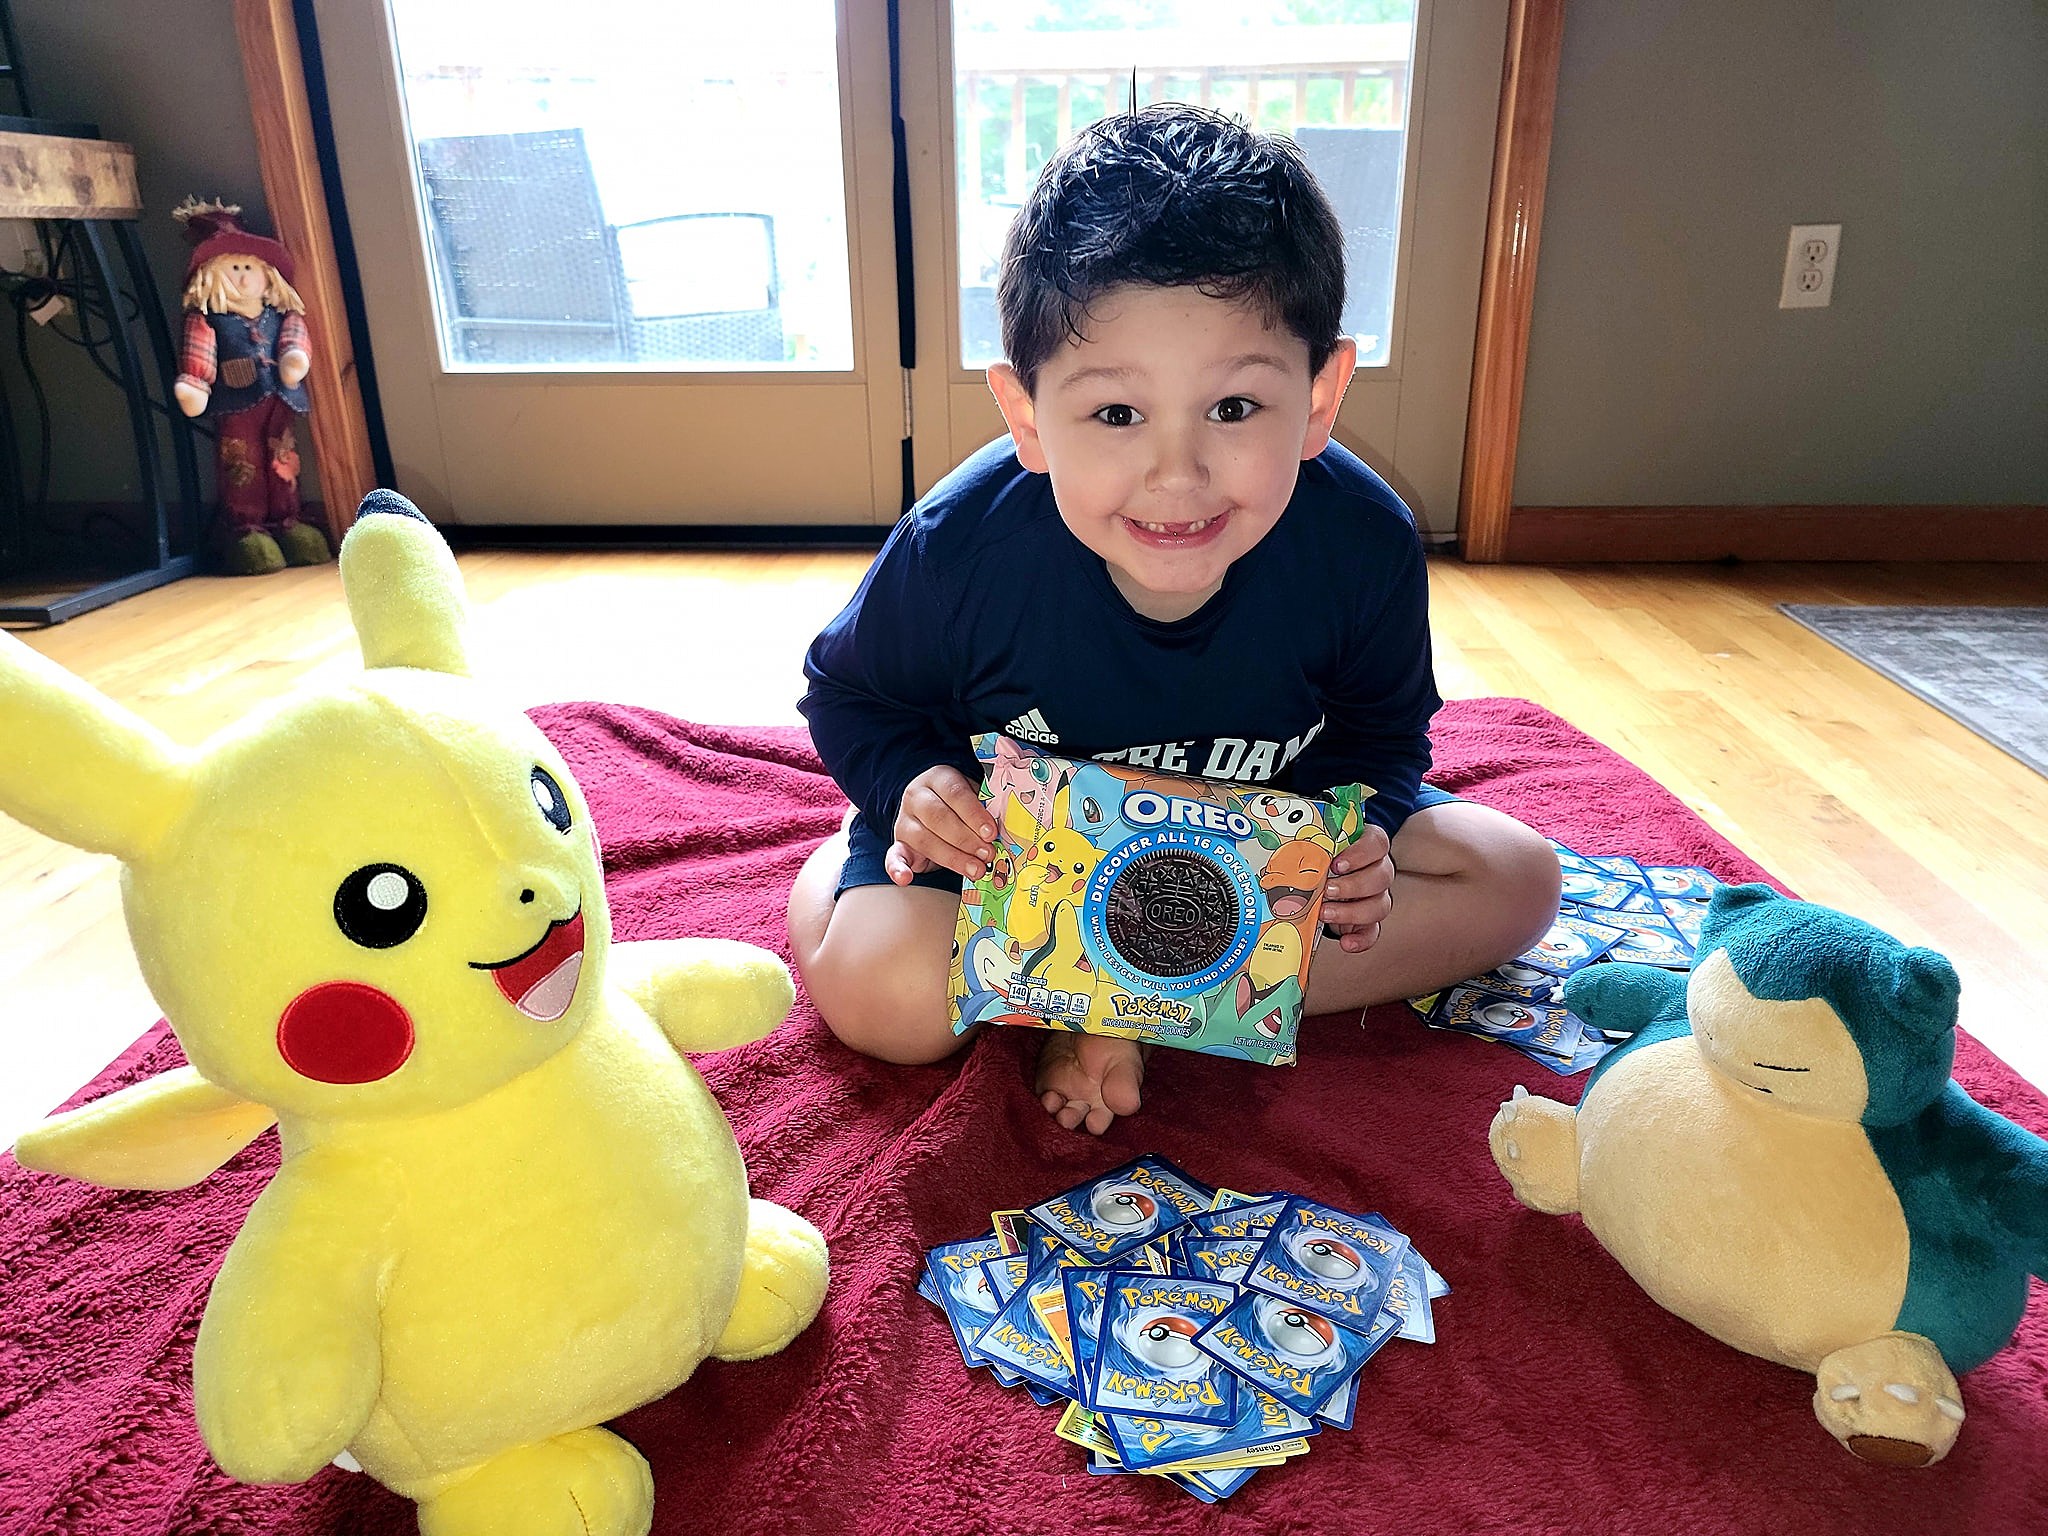 Happy Meal Pikachu Magnet | Fridge Kitchen Magnet | Cute Kawaii Anime  Pokemon Accessories & Decor